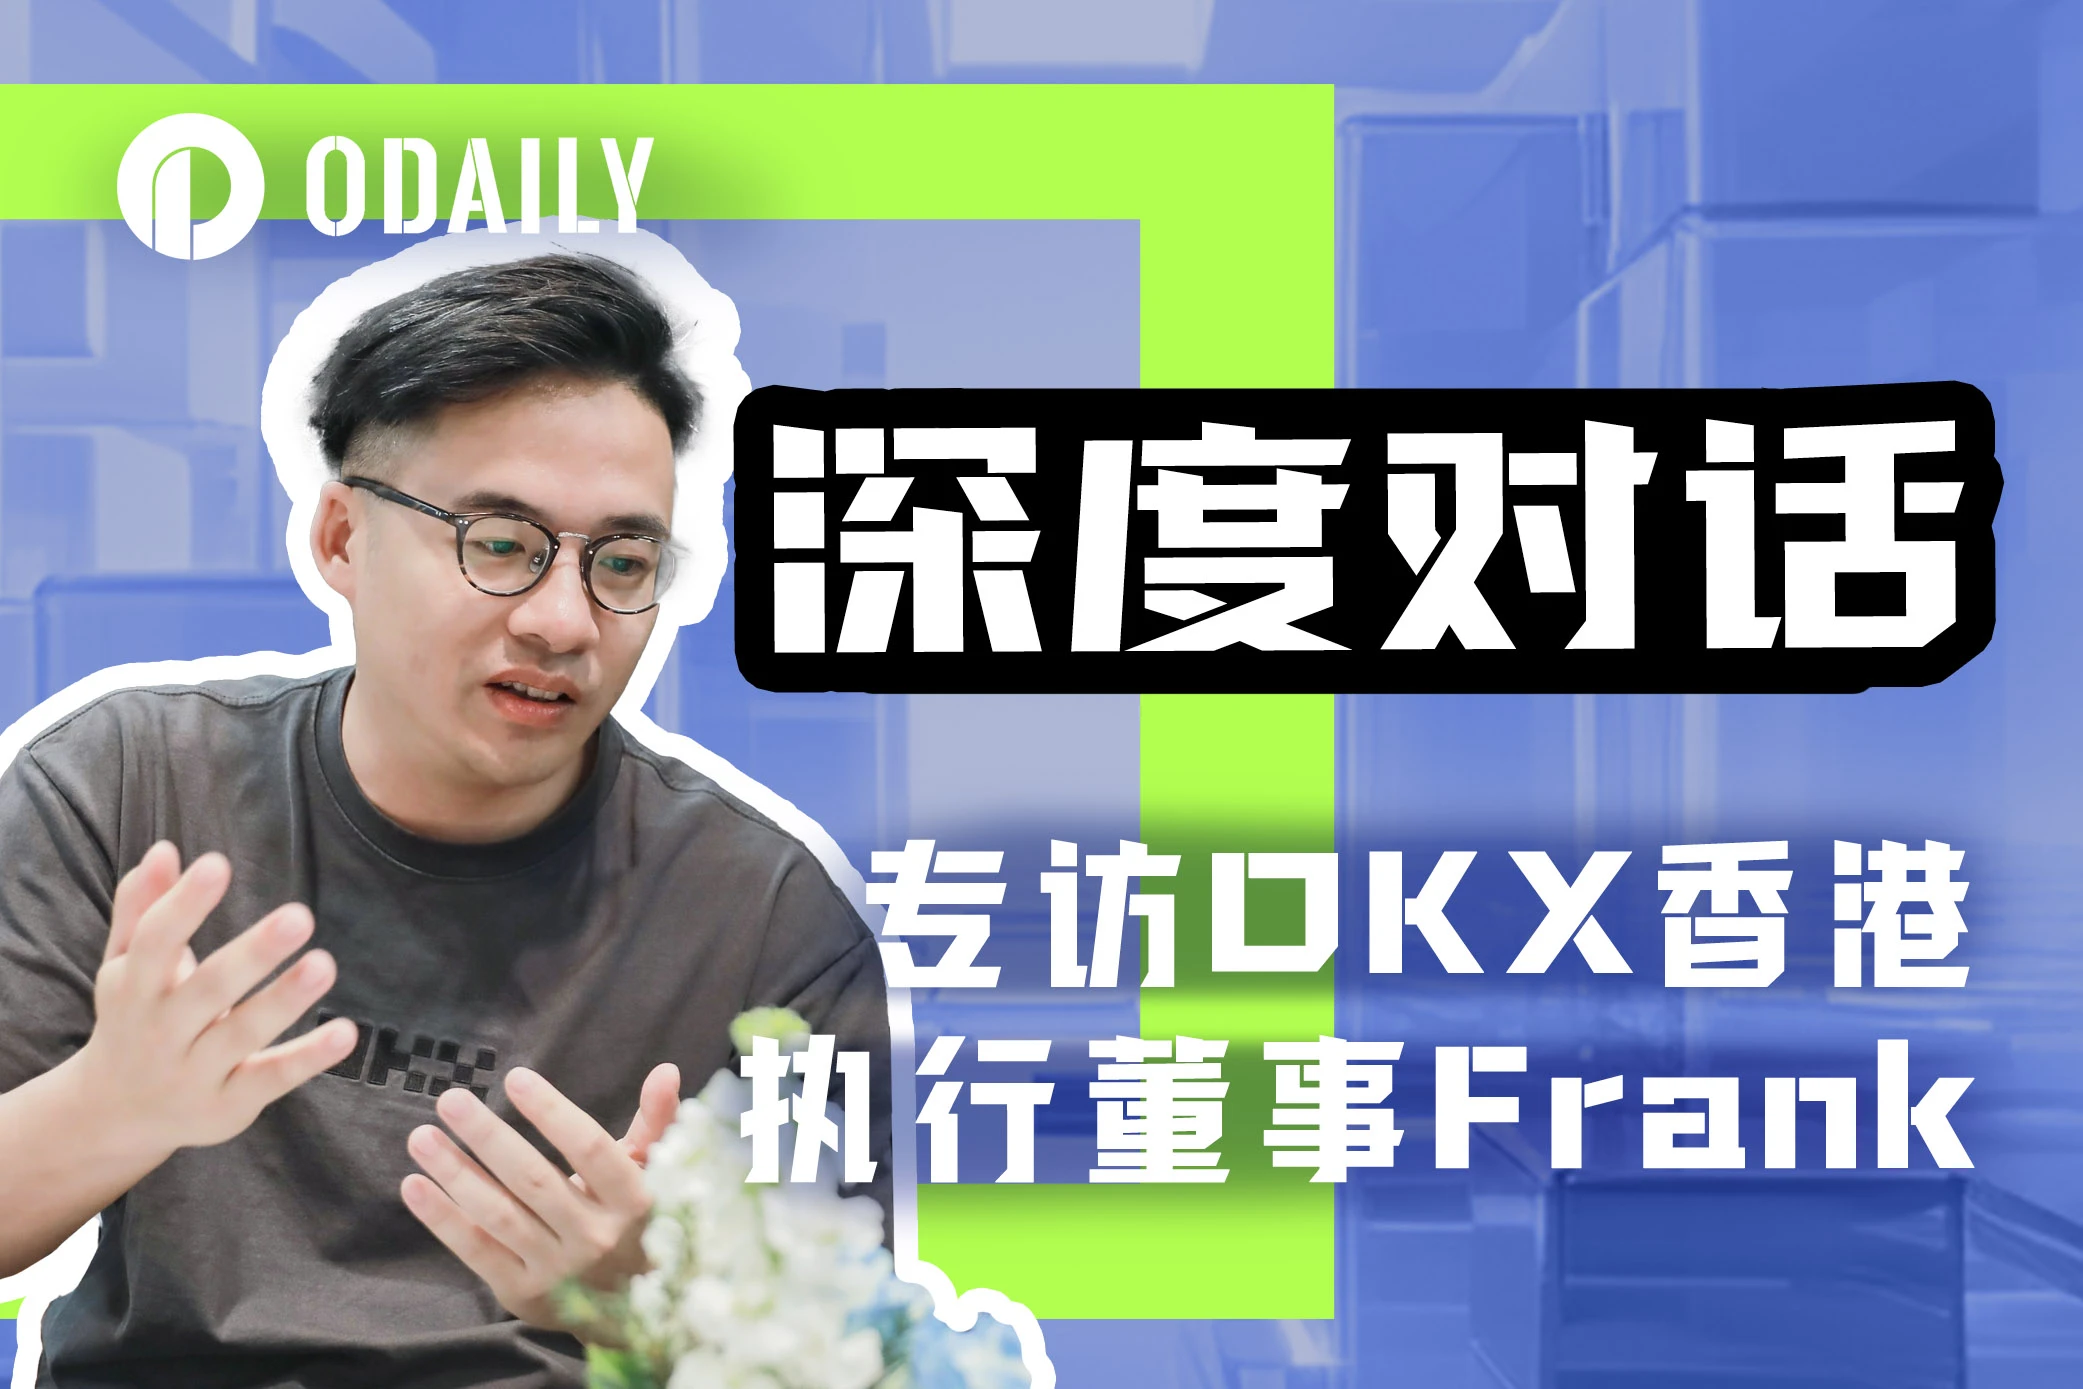 Odaily专访OKX欧易Frank：聚焦香港，拥抱VASP